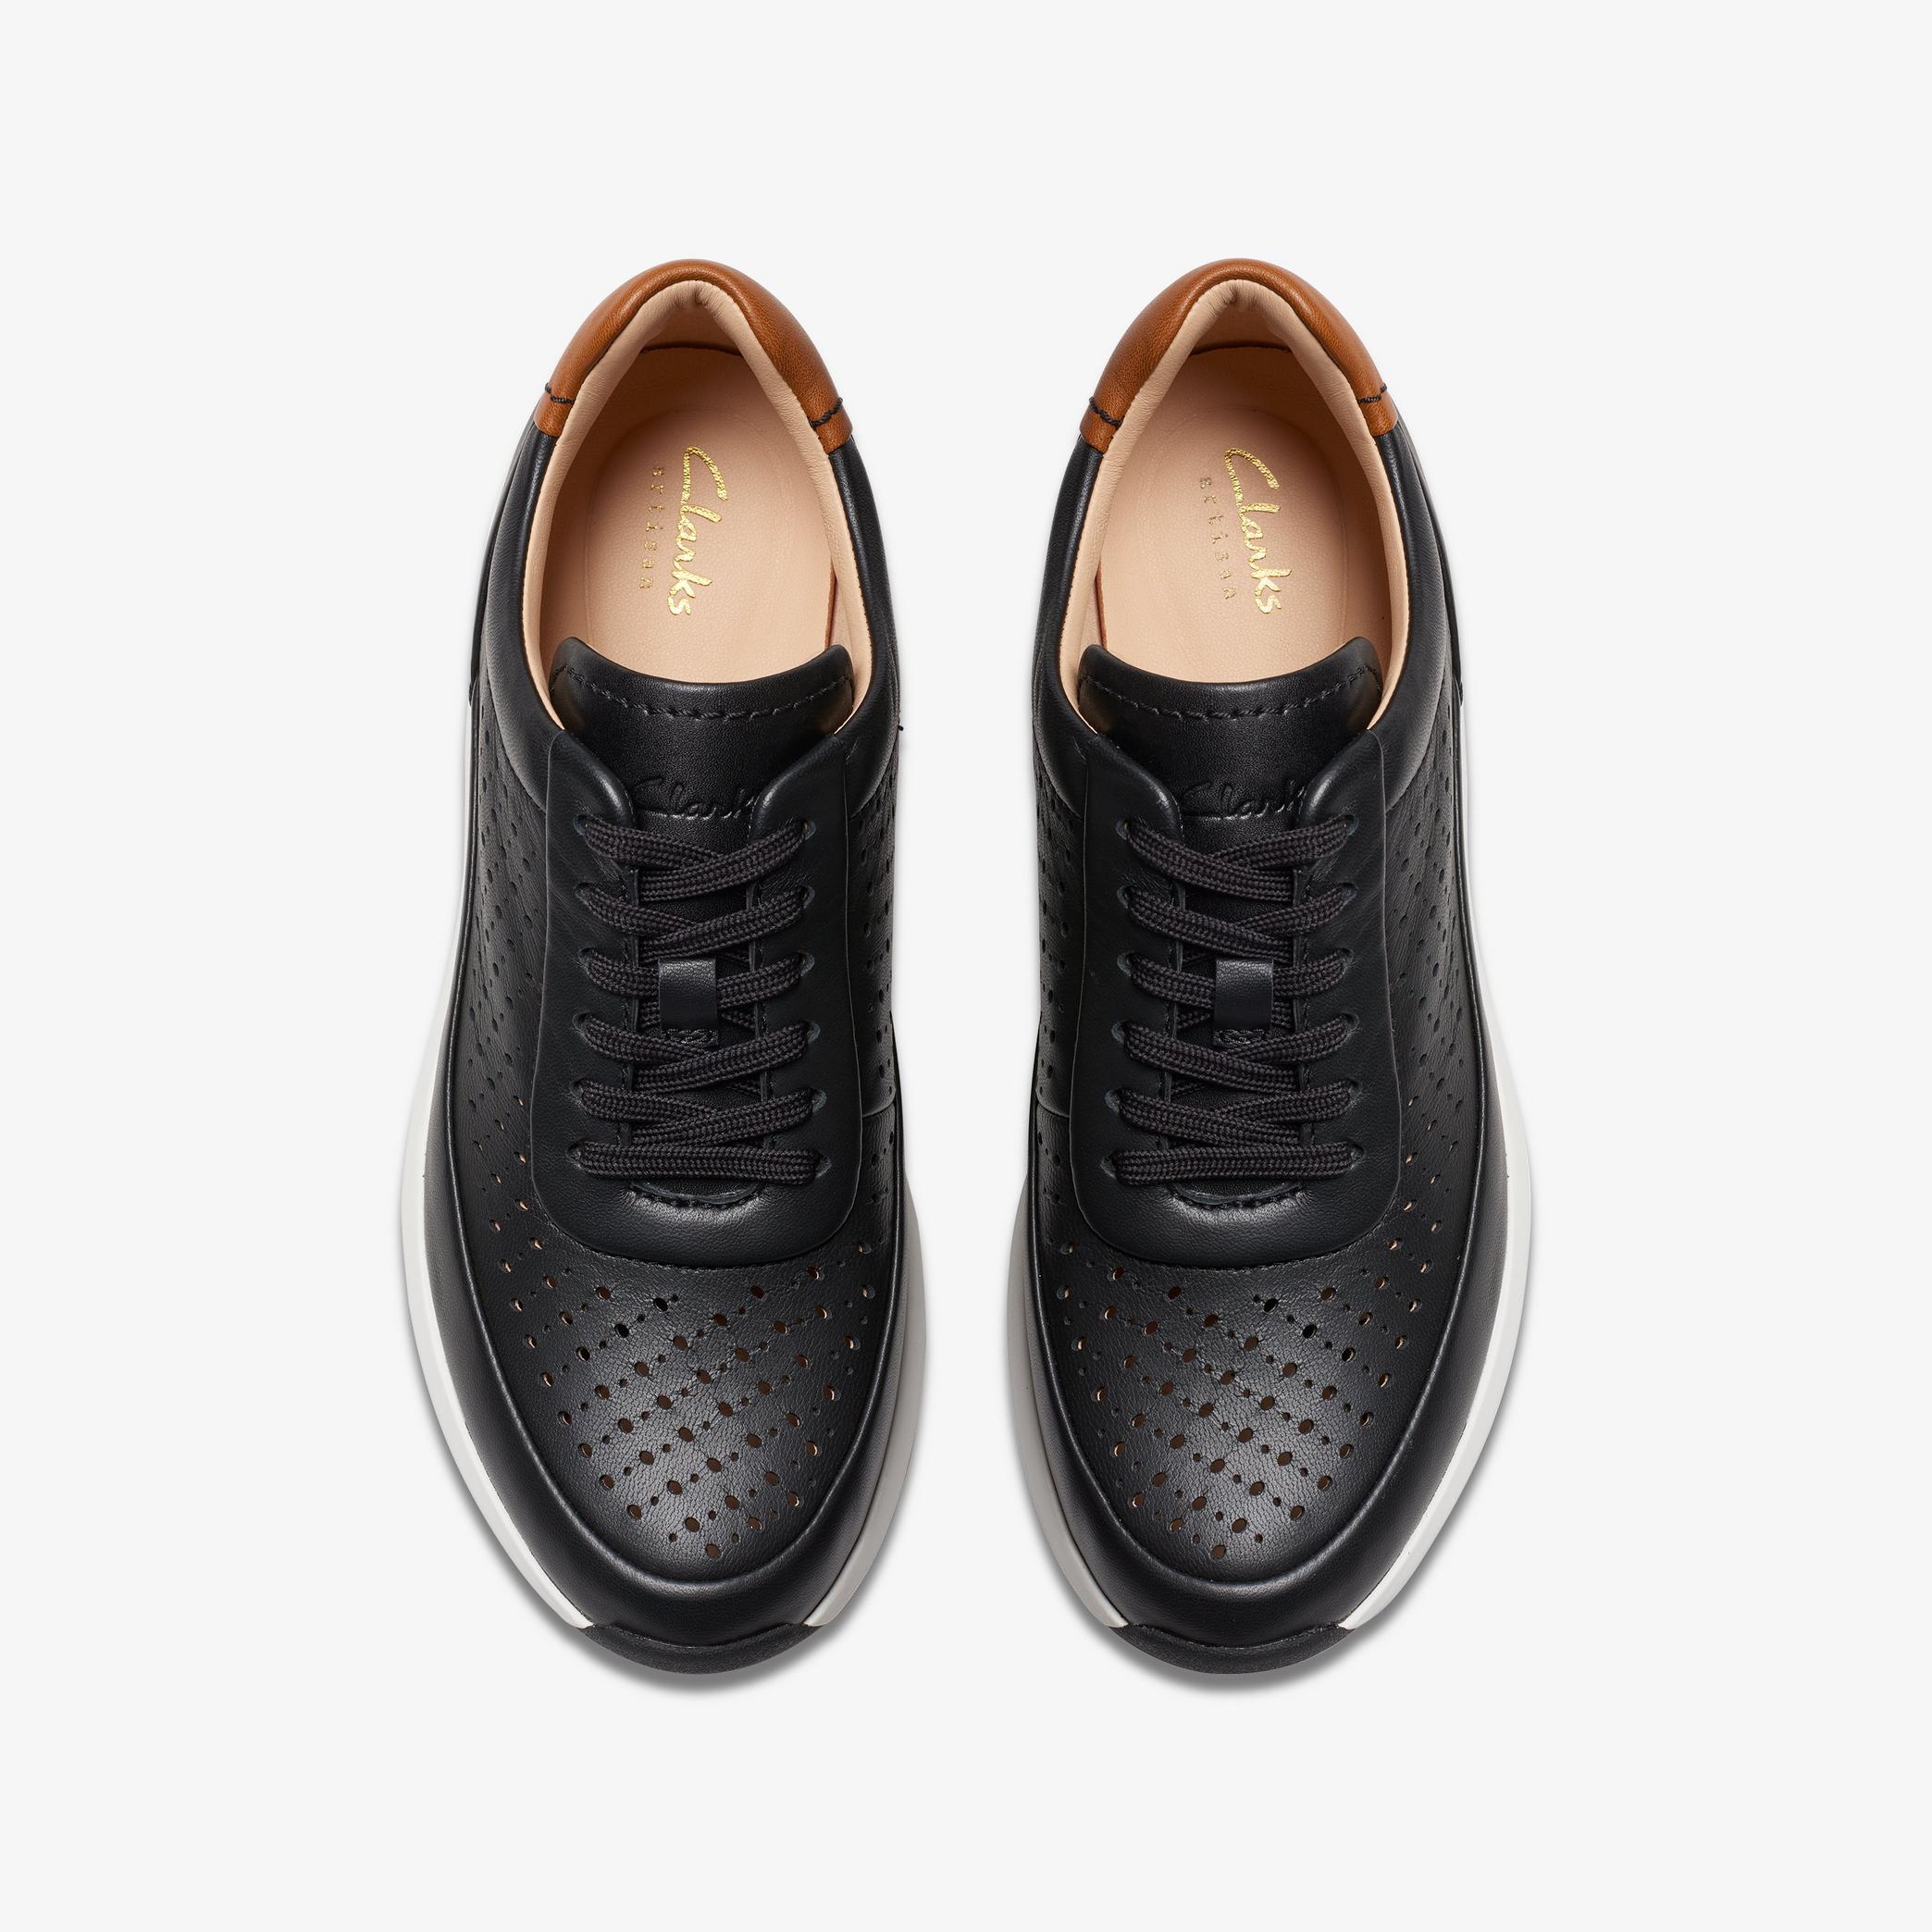 TIVOLI GRACE Black Leather Sneakers, view 6 of 6